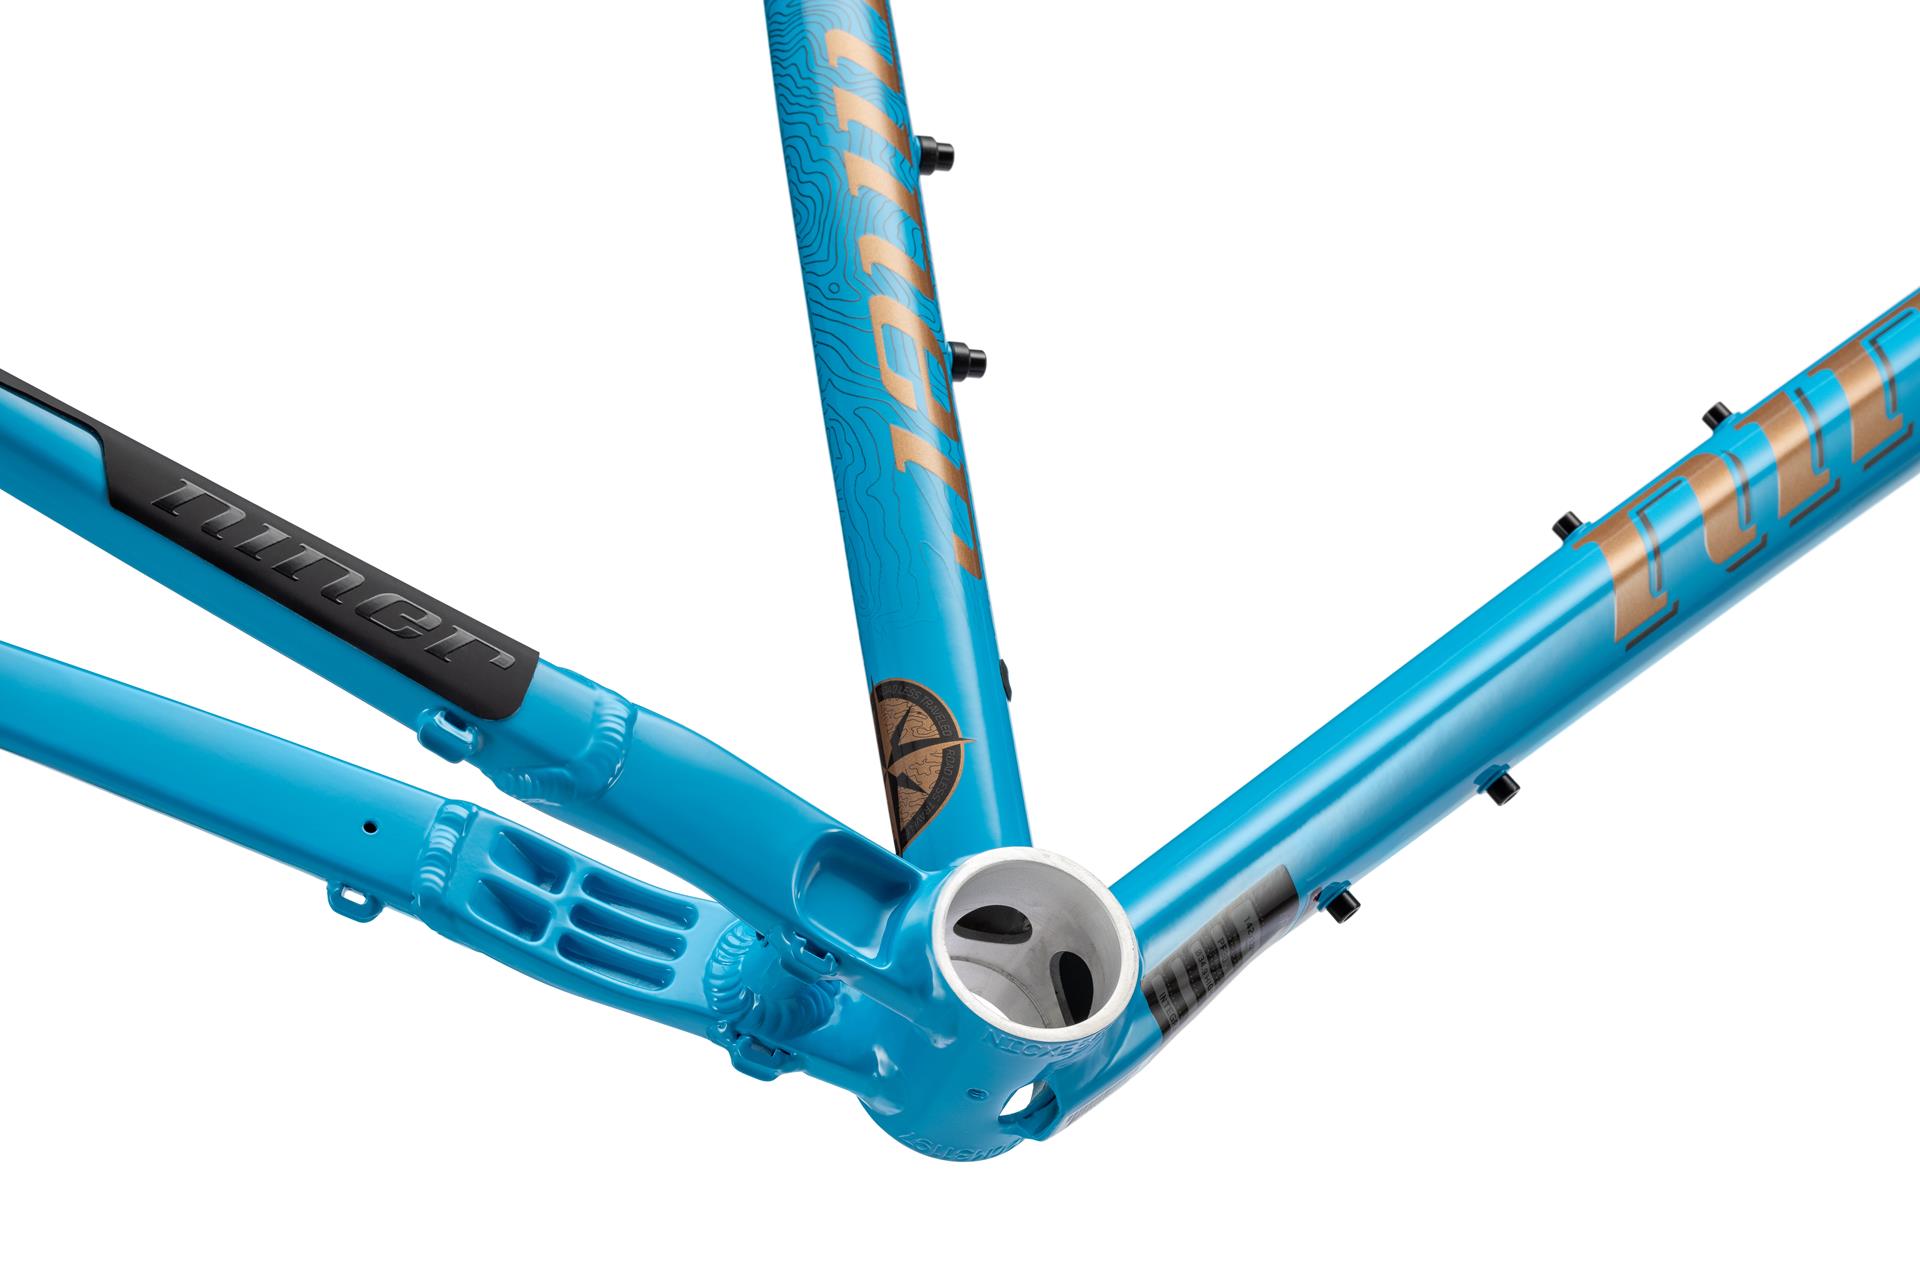 Niner RLT 4-star bike, Grey/Blue, 59